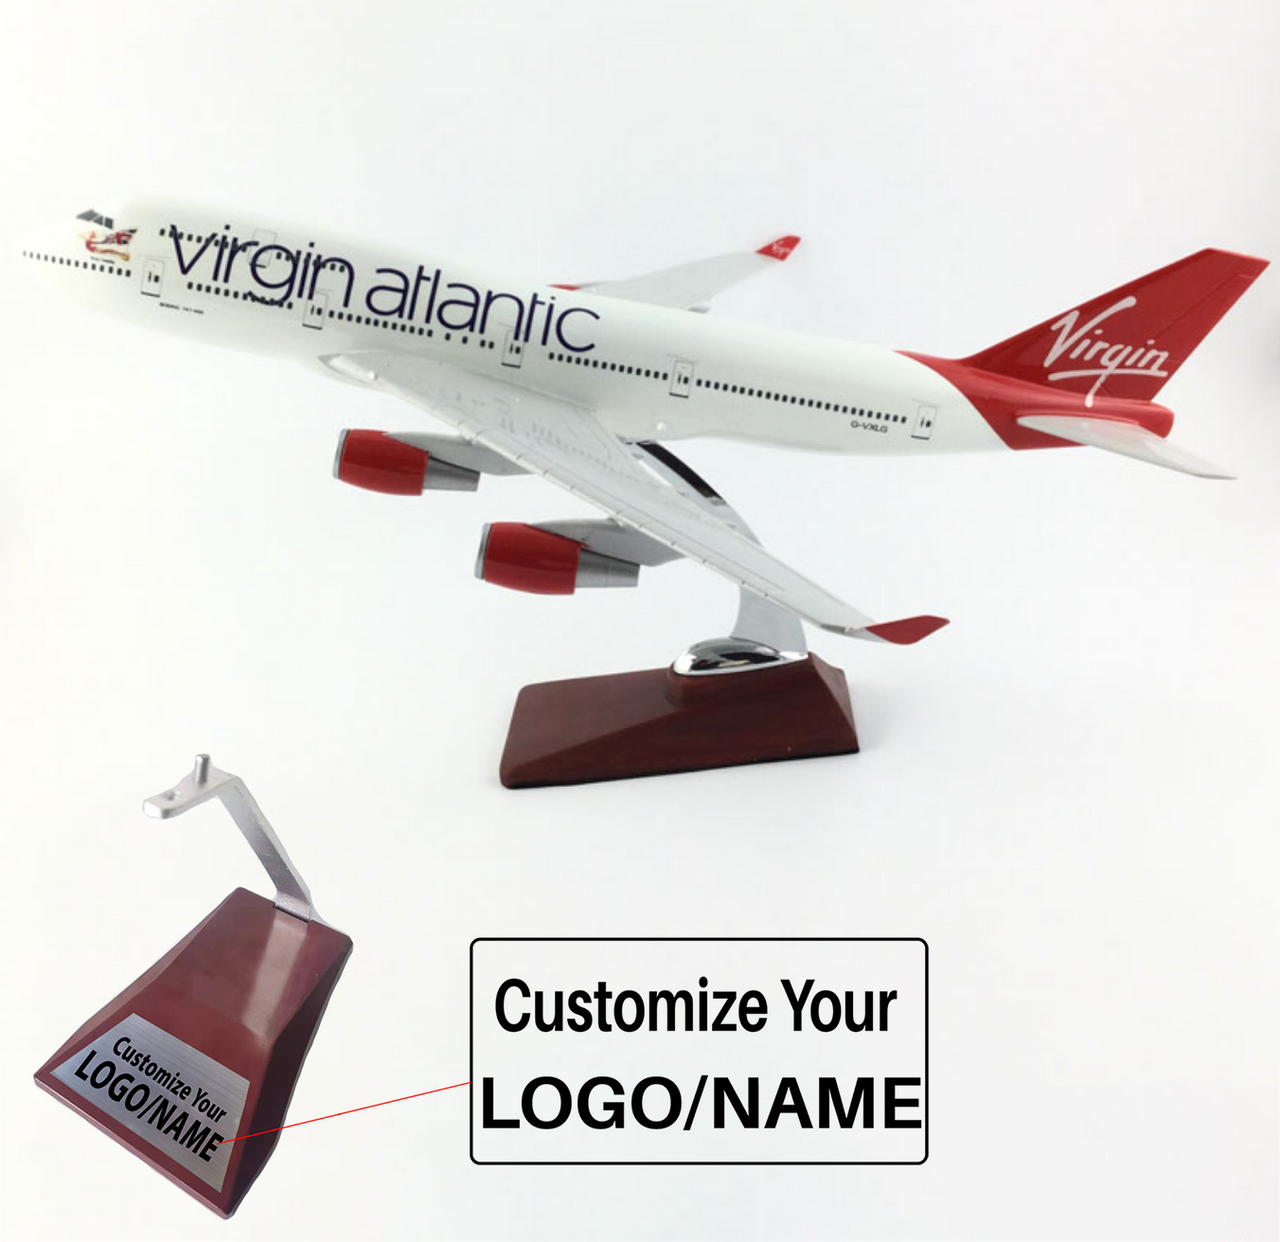 Virgin Atlantic Boeing 747 Airplane Model (Handmade Special Edition 45CM)